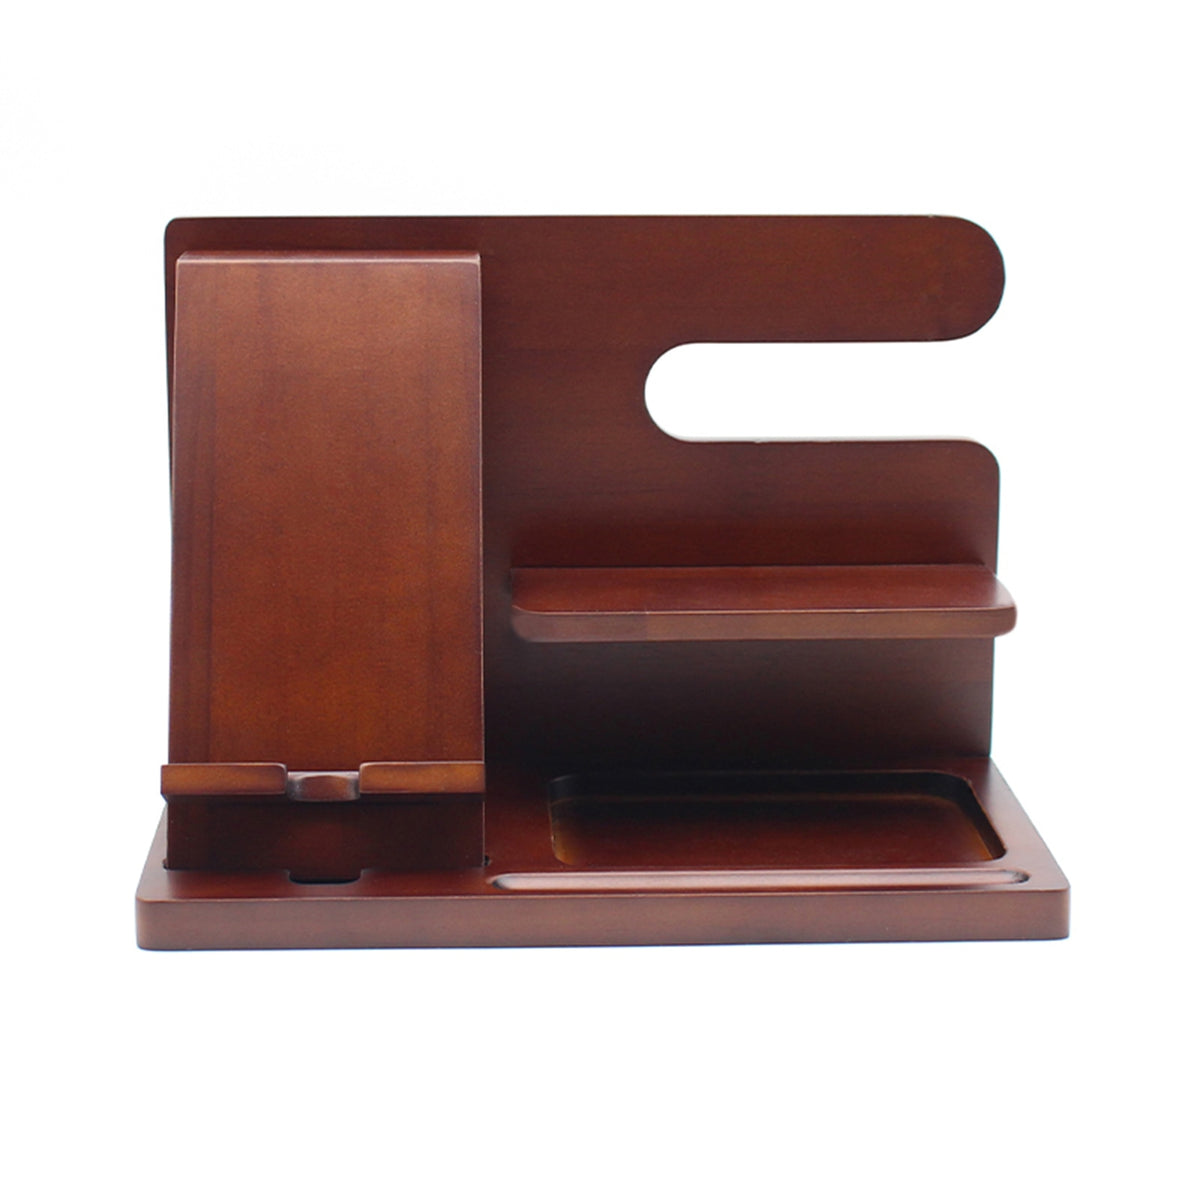 Wooden Phone Holder Docking Station Wallet Stand Watches Purse Glasses Key Storage Box Desk Display Organizer Bedside